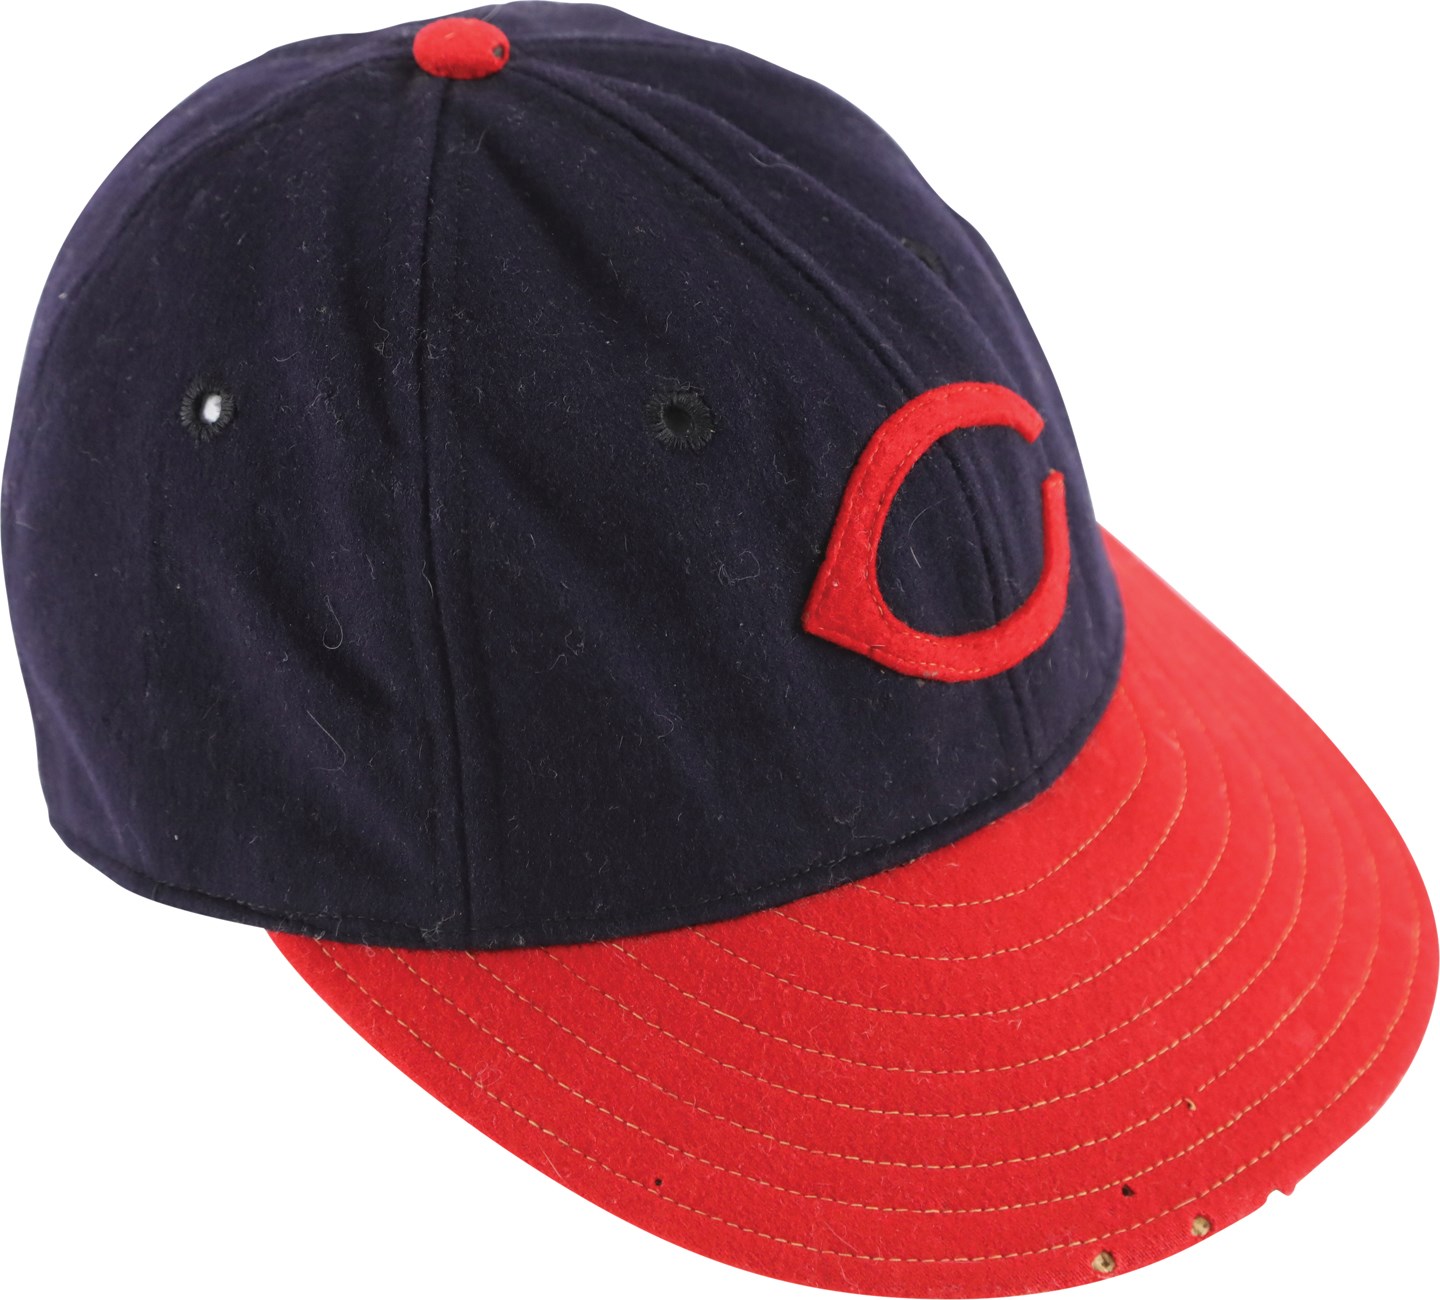 Circa 1939 Harry Craft Cincinnati Reds Game Worn Hat